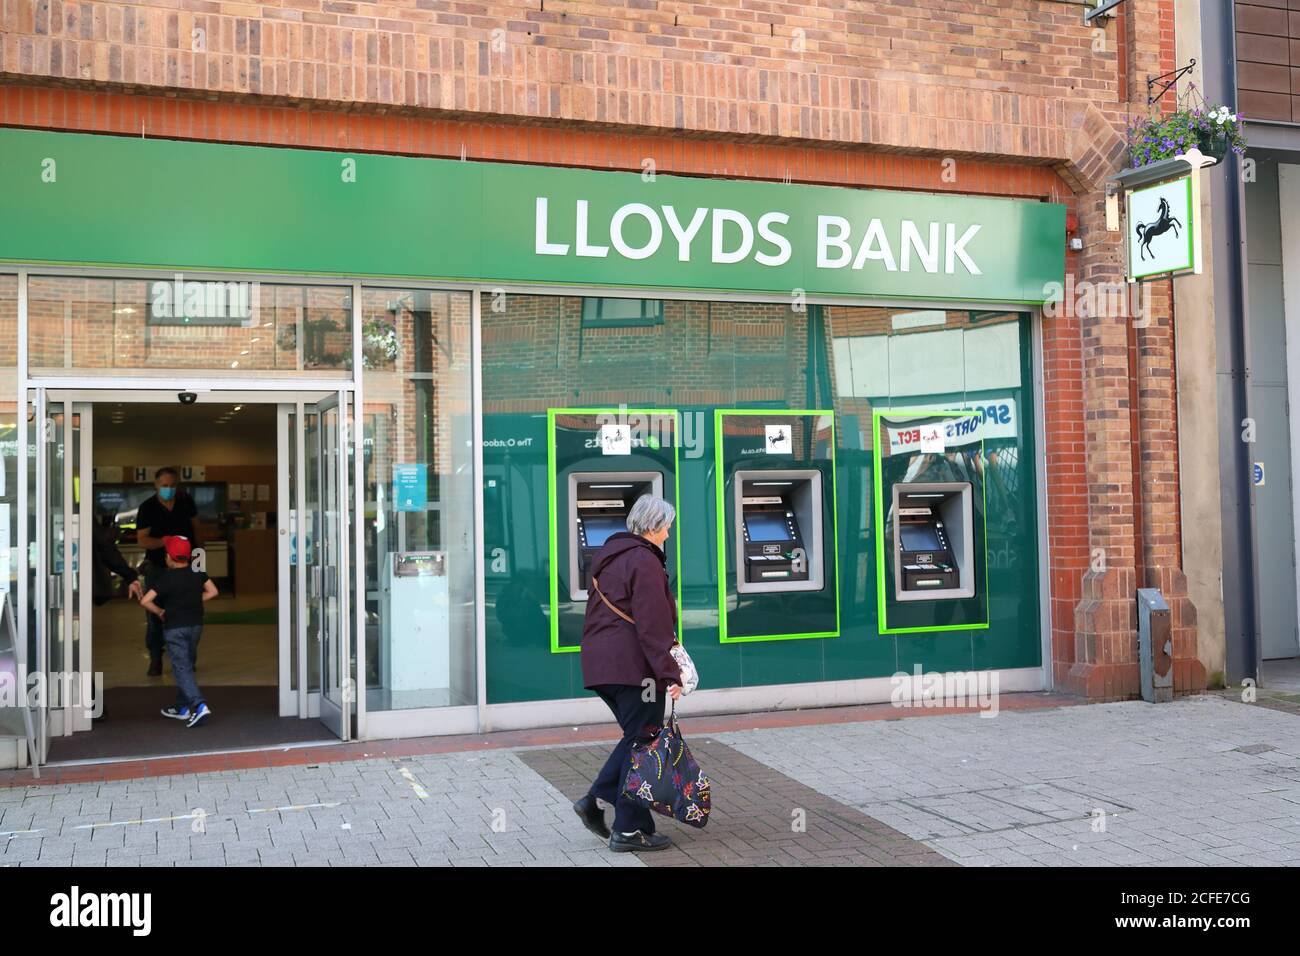 Lloyds Bank branch in High Wycombe, Buckinghamshire, UK Stock Photo